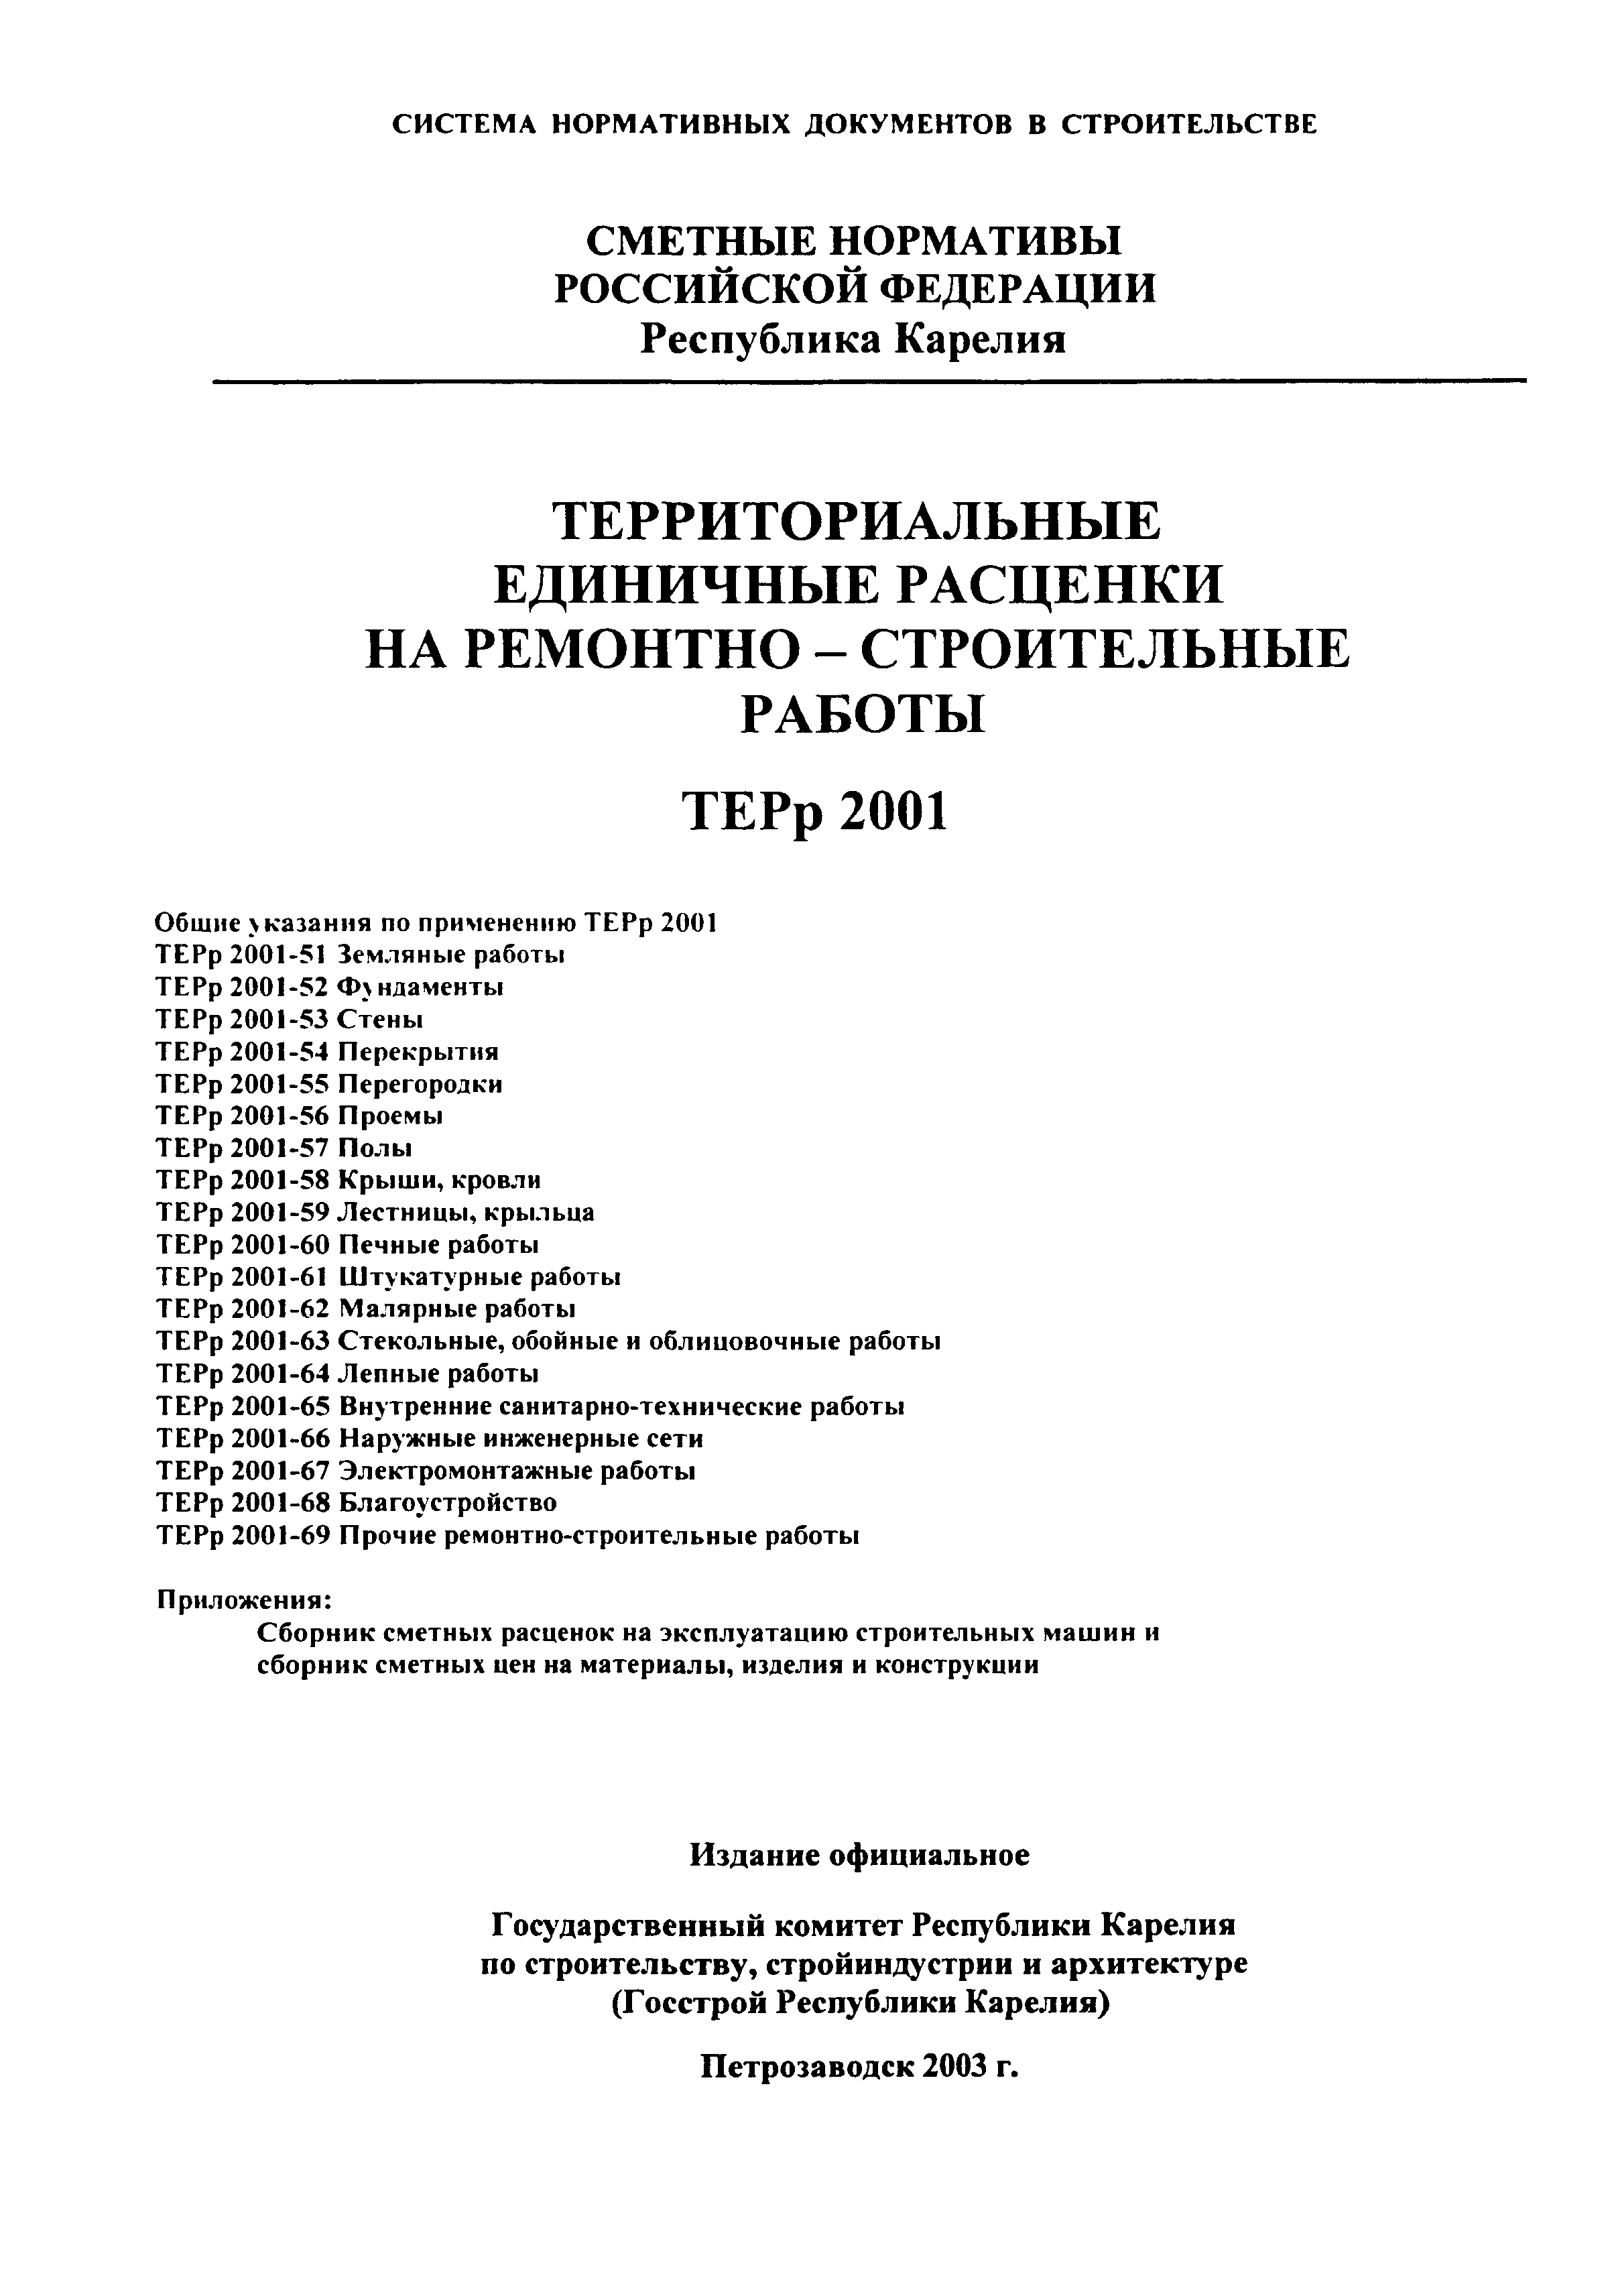 ТЕРр Республика Карелия 2001-67